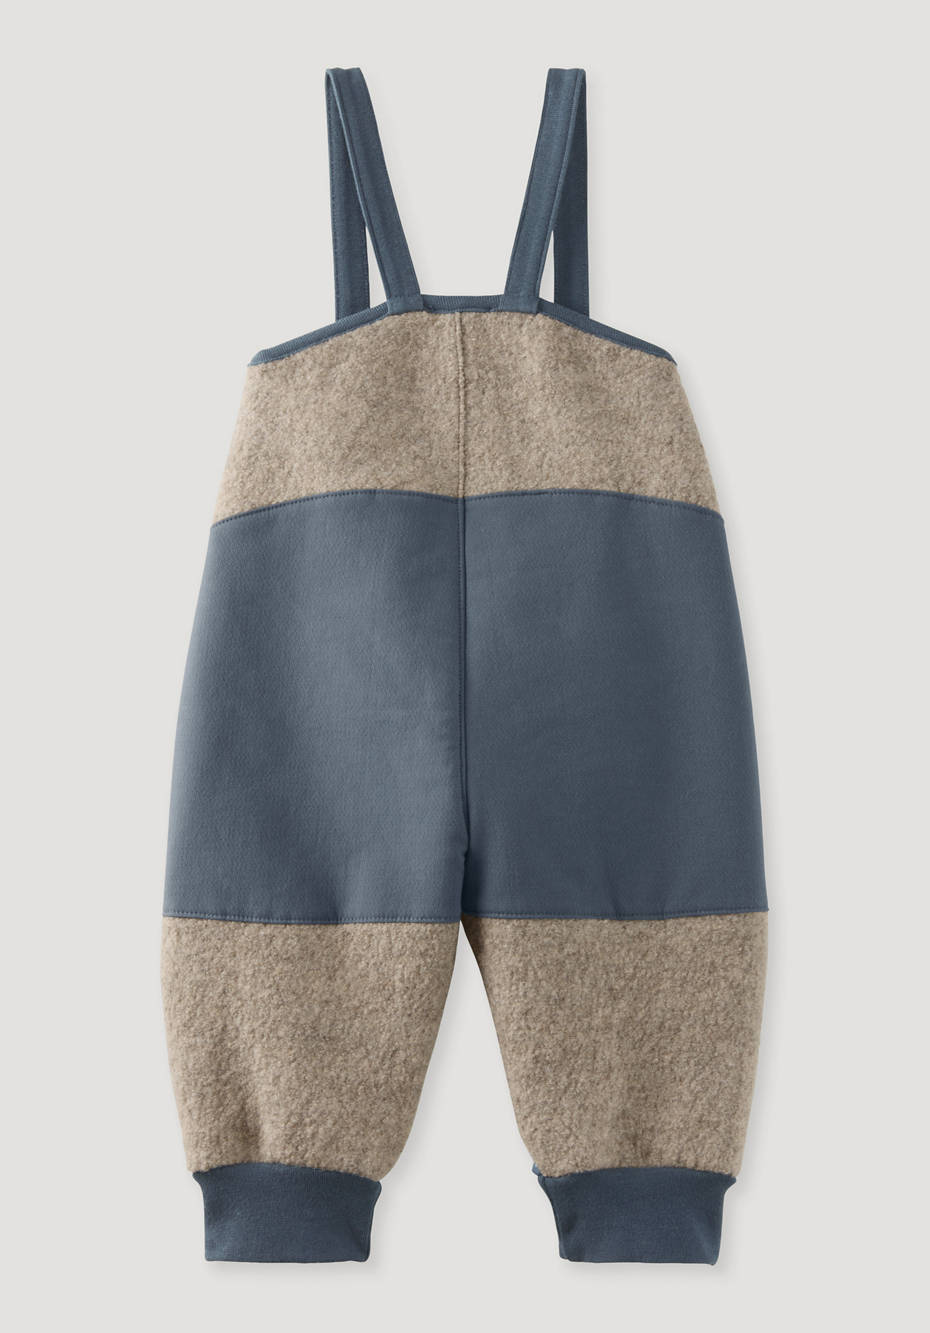 Walk pants made from organic merino wool with nature shell